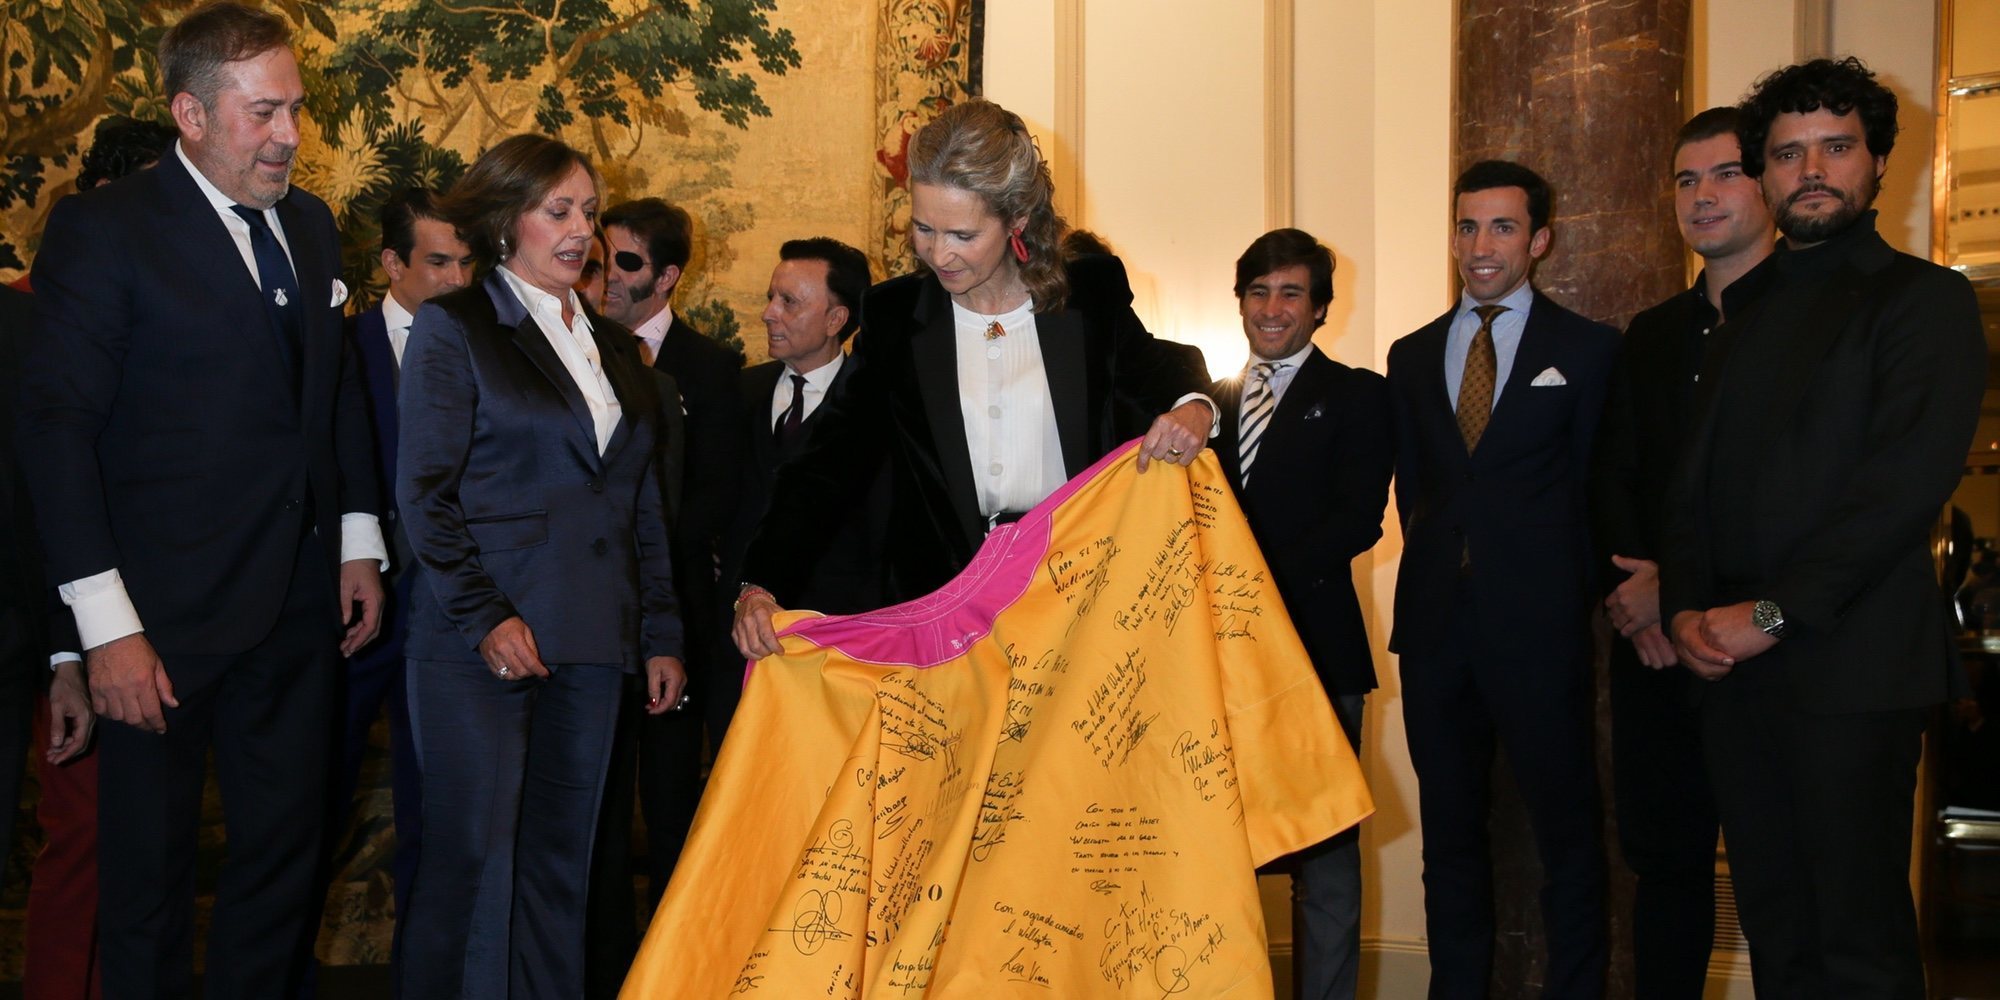 La Infanta Elena recibe un homenaje del mundo del toreo mientras Gonzalo Caballero se recupera